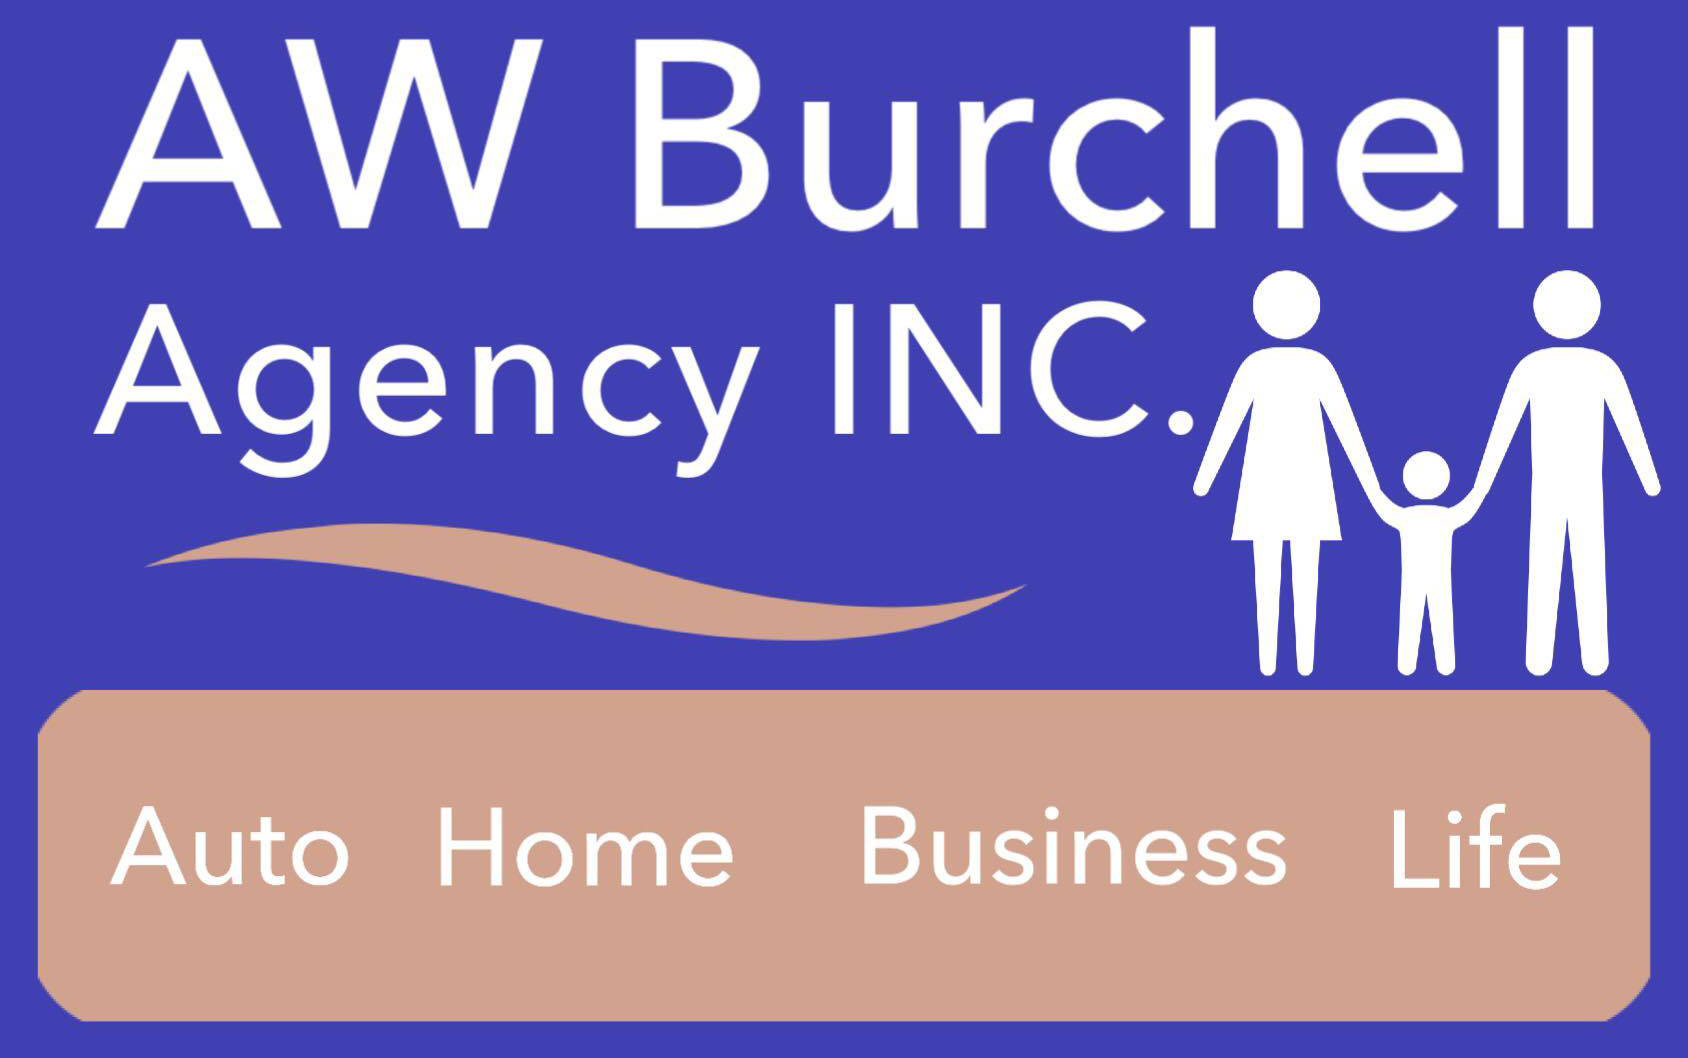 AW Burchell Agency Inc